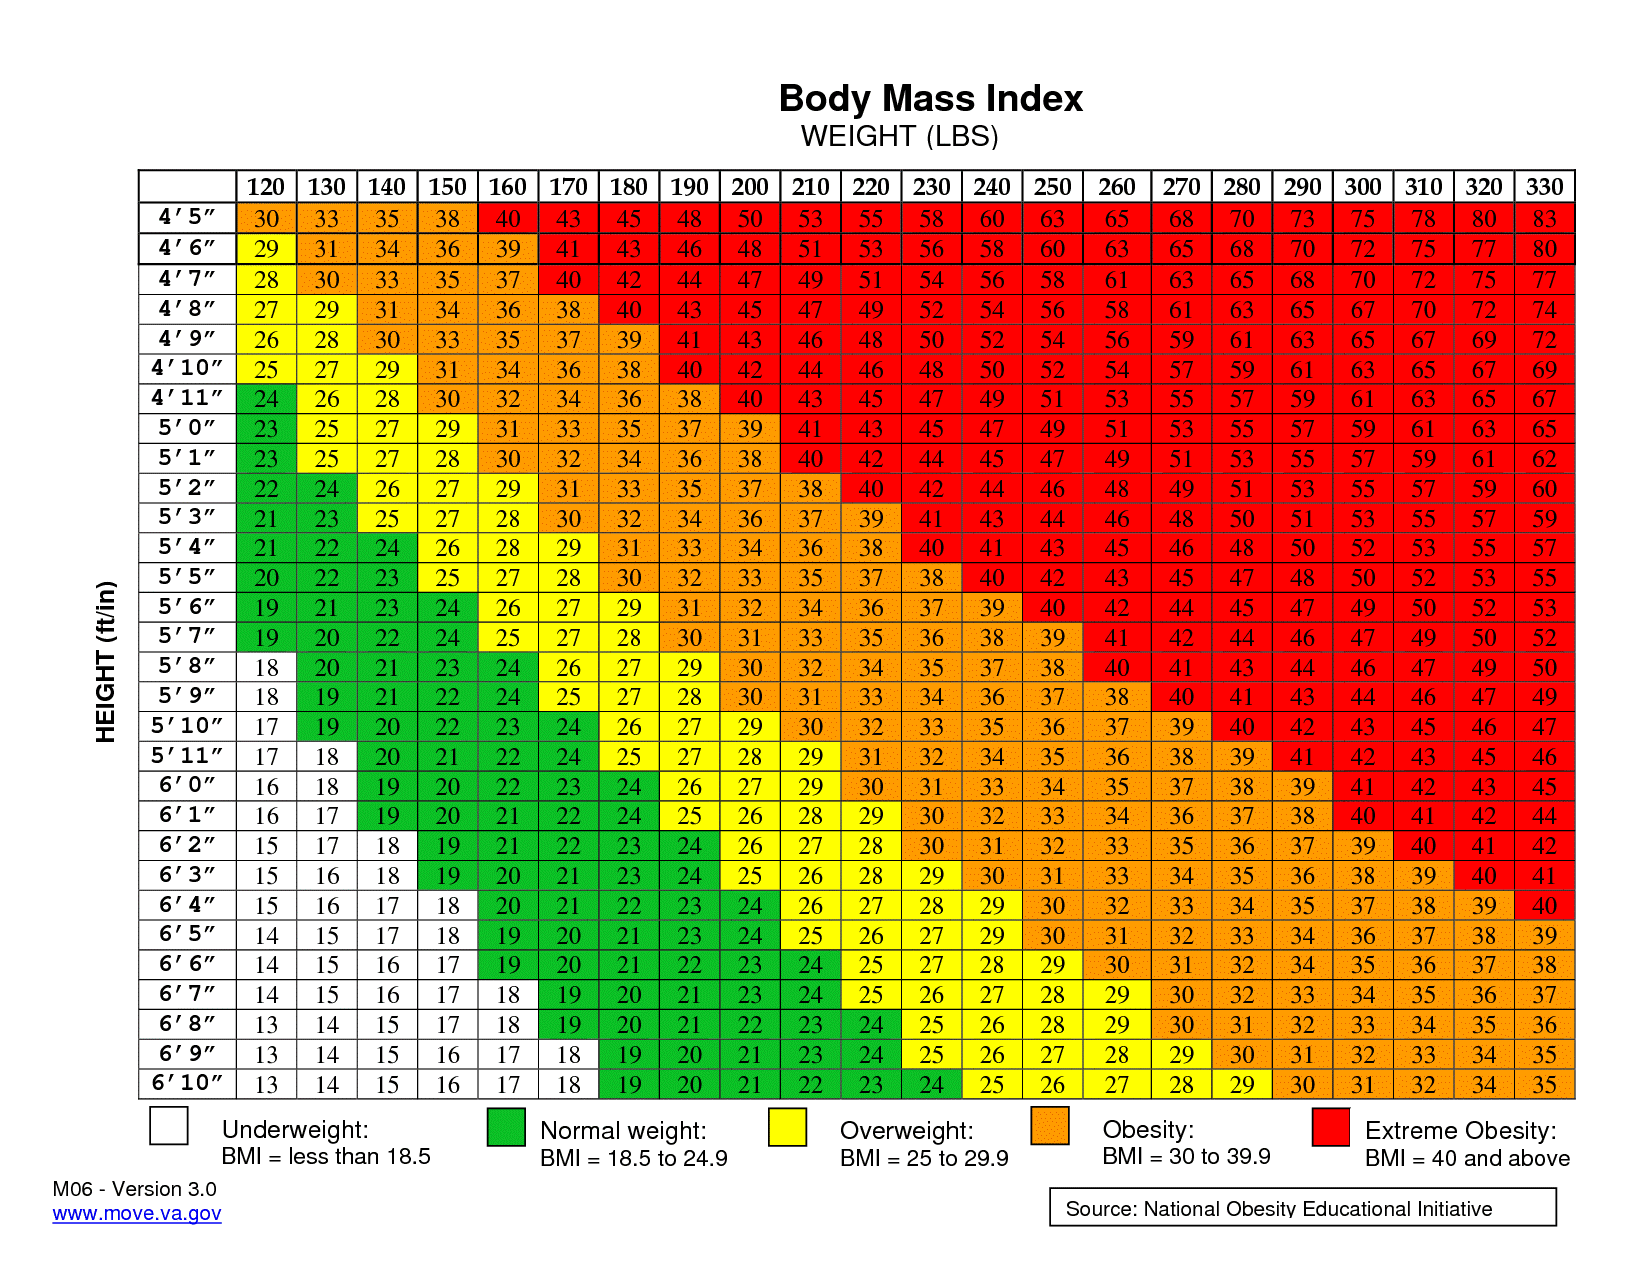 Morbid Obesity Chart Height Weight